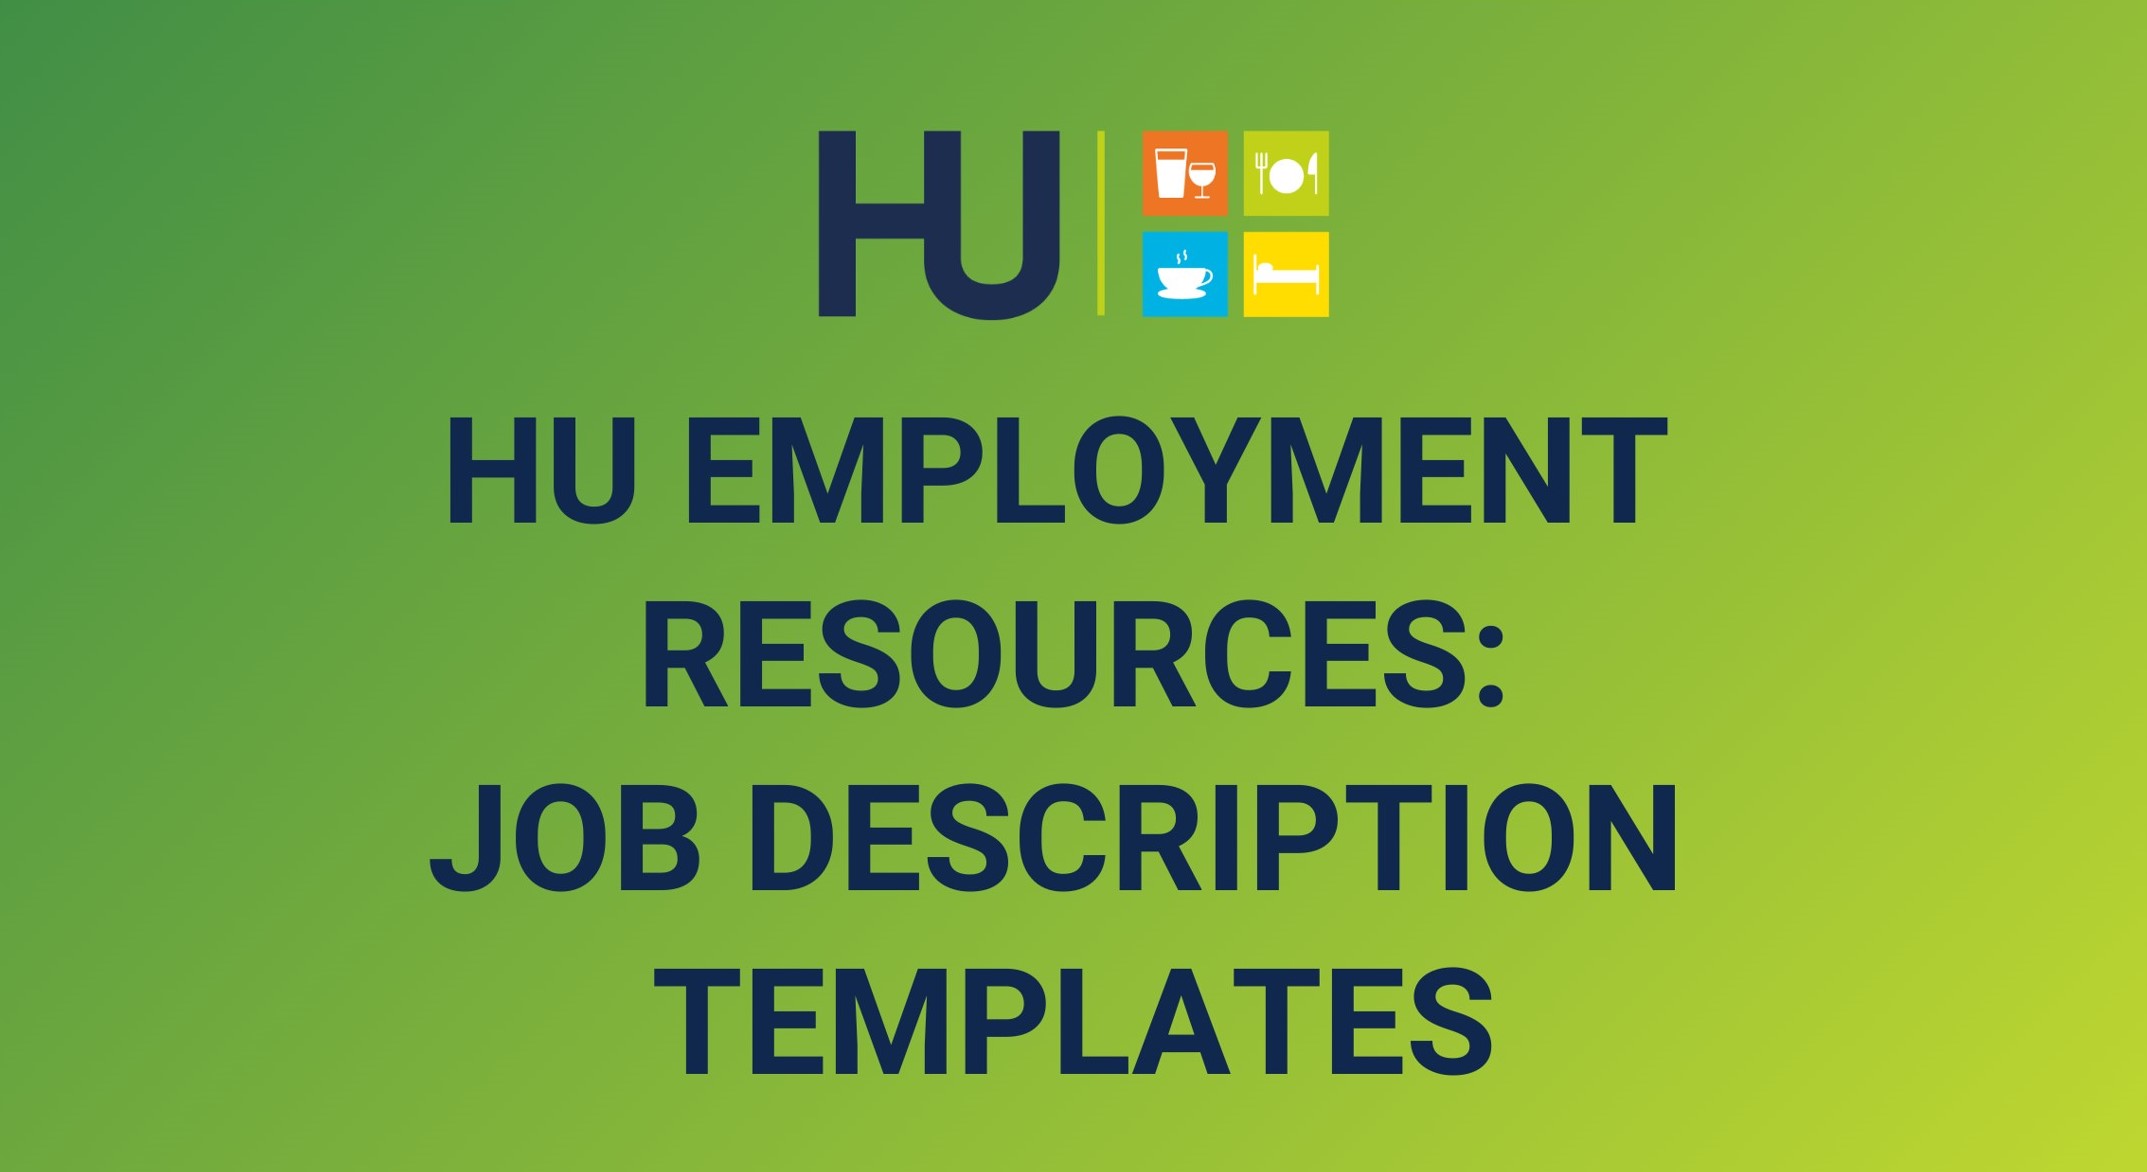 HU EMPLOYMENT RESOURCES - JOB DESCRIPTION TEMPLATES